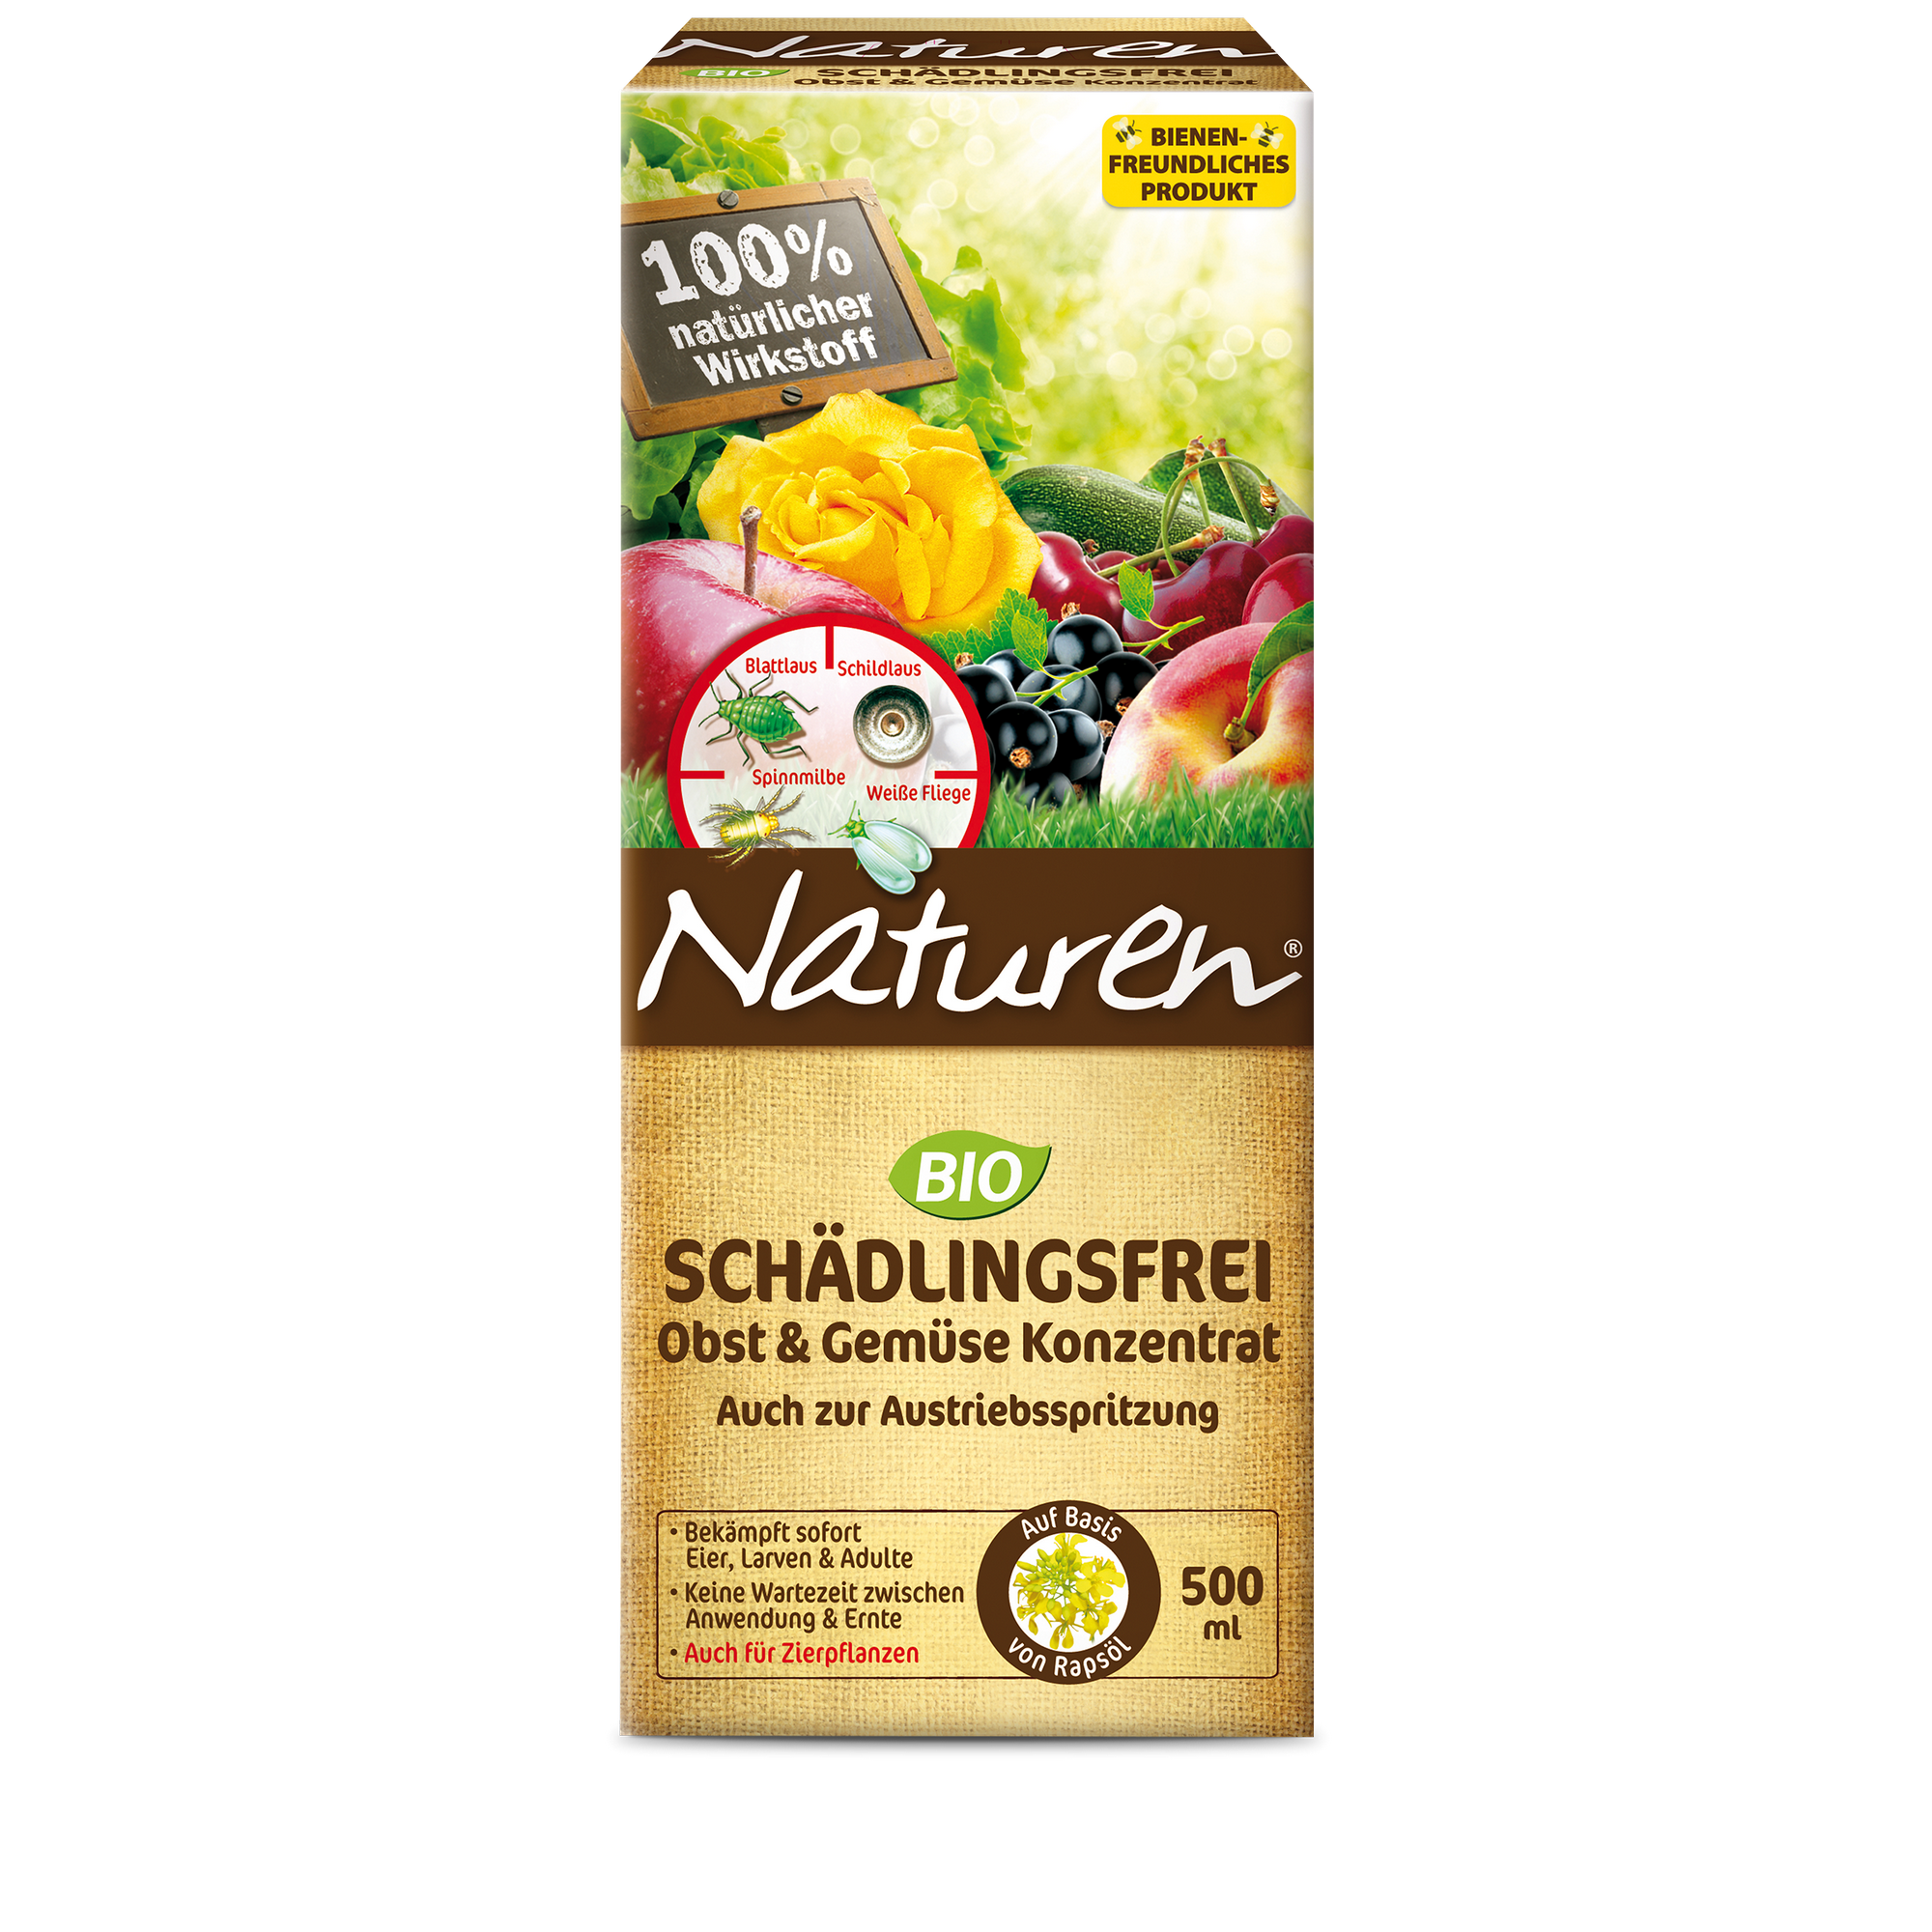 Bio Schädlingsfrei Obst & Gemüse Konzentrat 500 ml + product picture